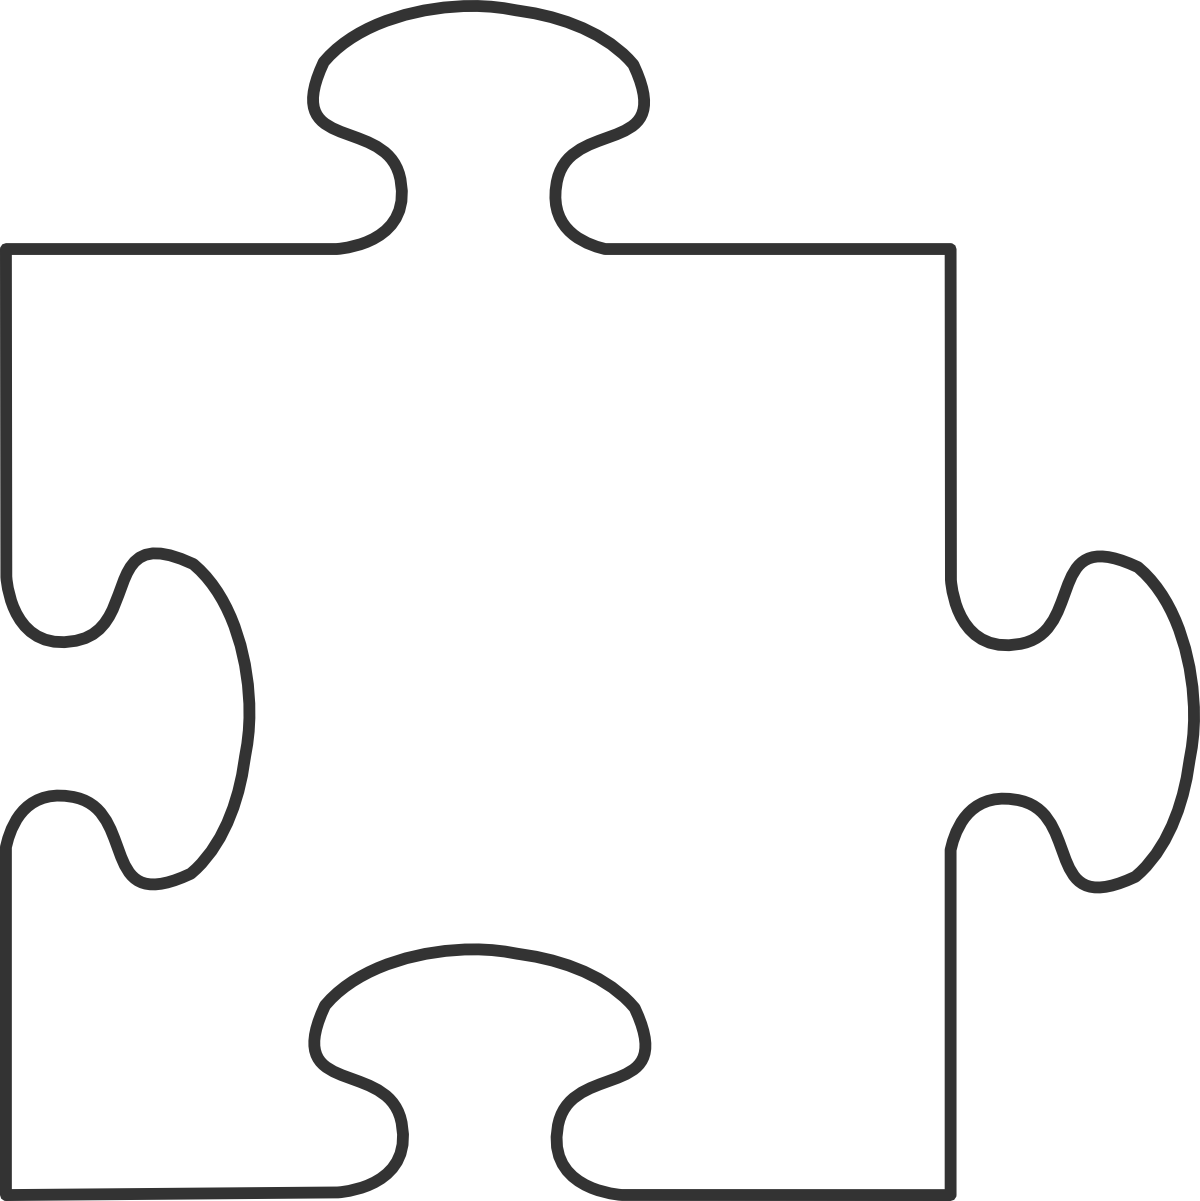 Clip Art of Puzzle Pieces